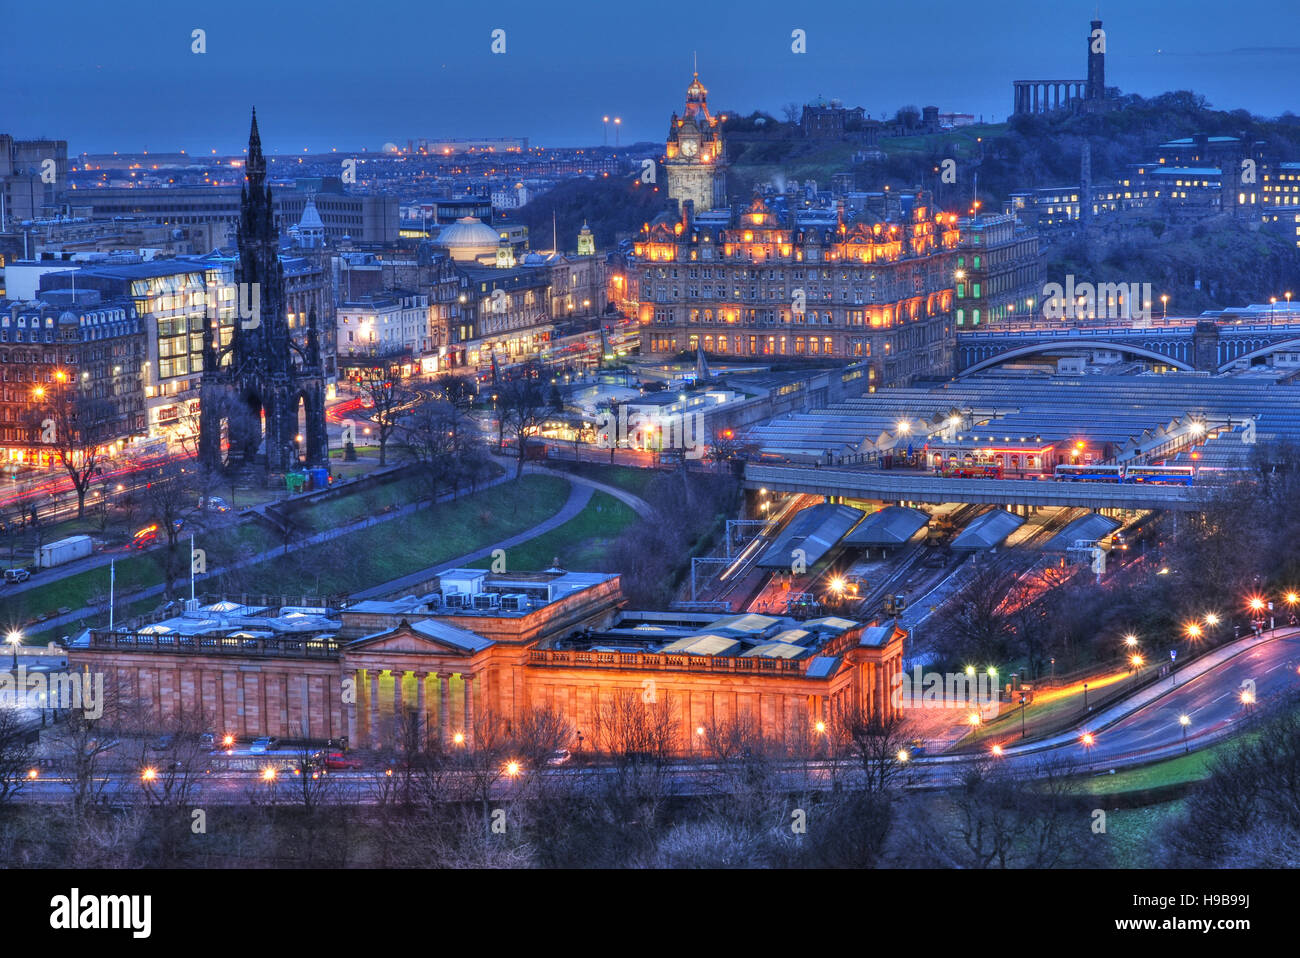 View of Edinburgh at night, Scotland Stock Photo